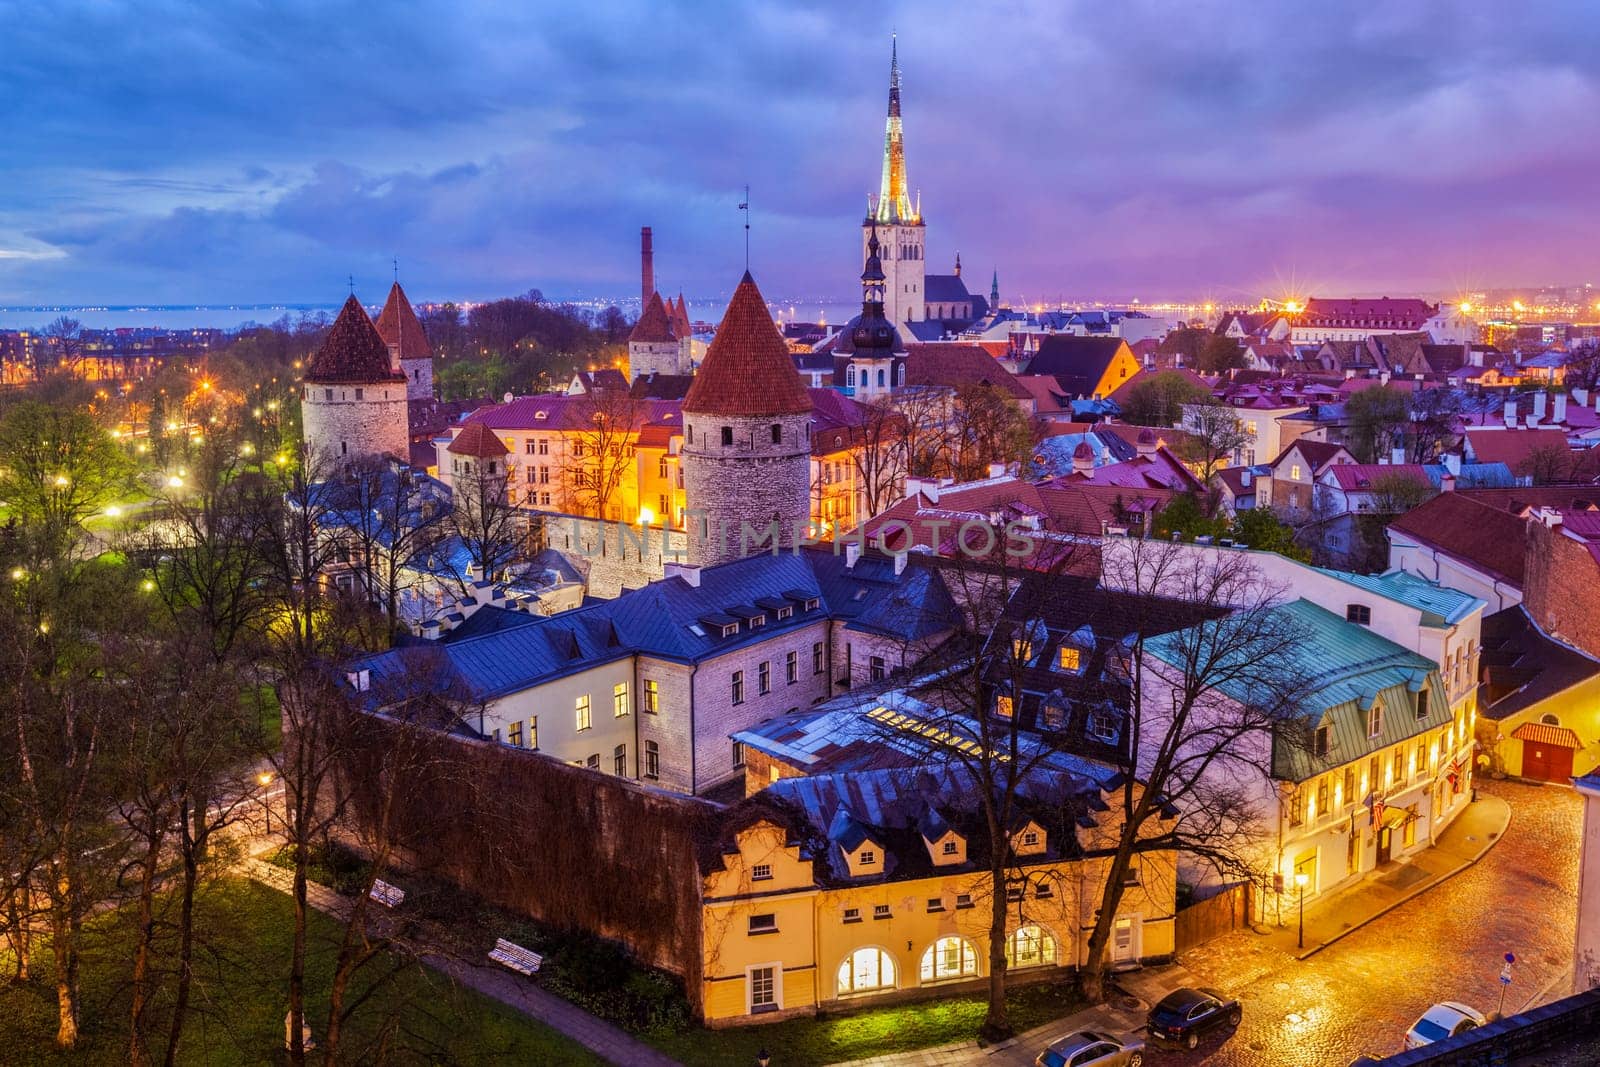 Tallinn Medieval Old Town, Estonia by dimol